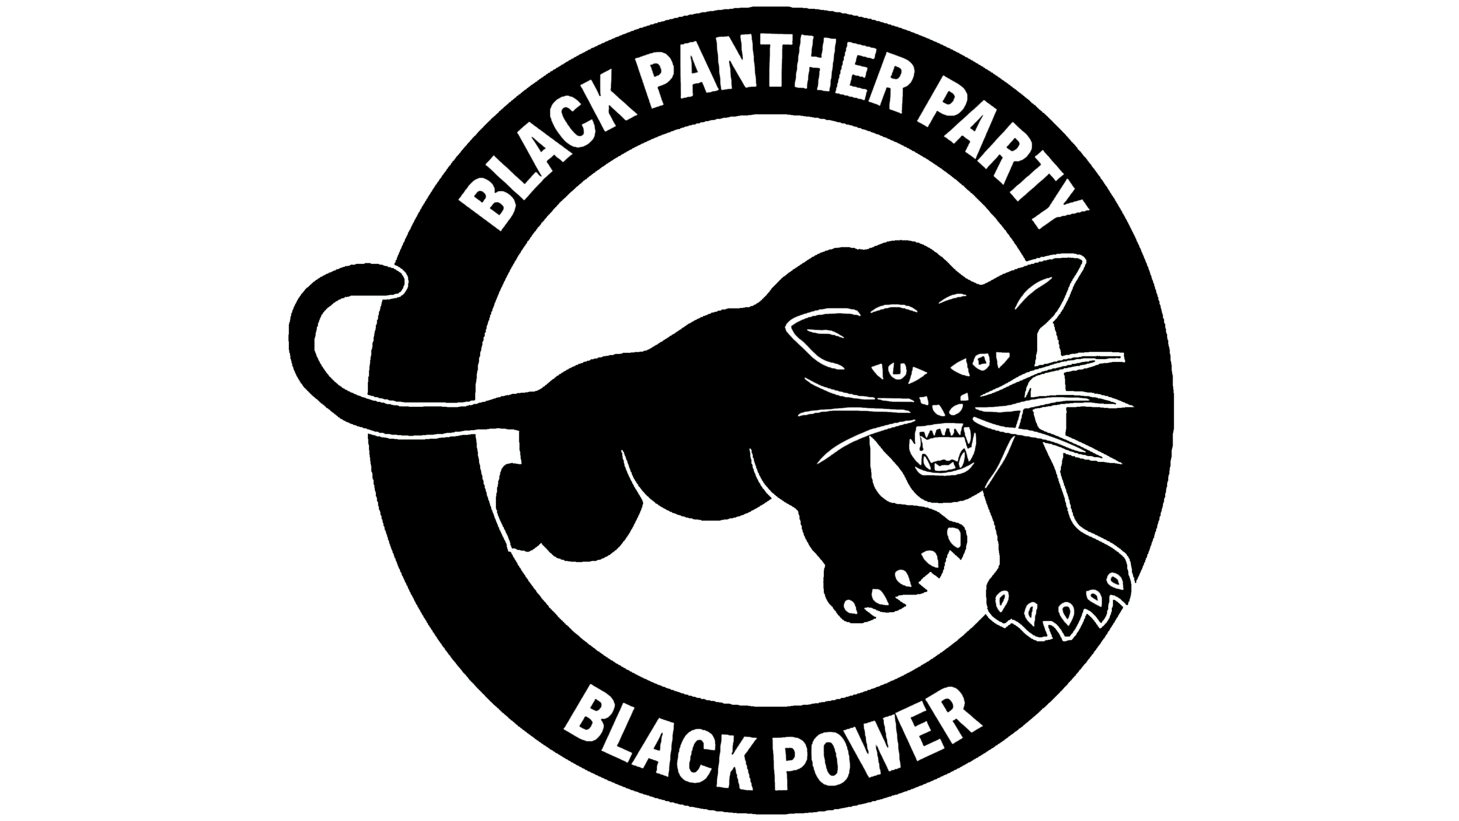 Black panther party logo